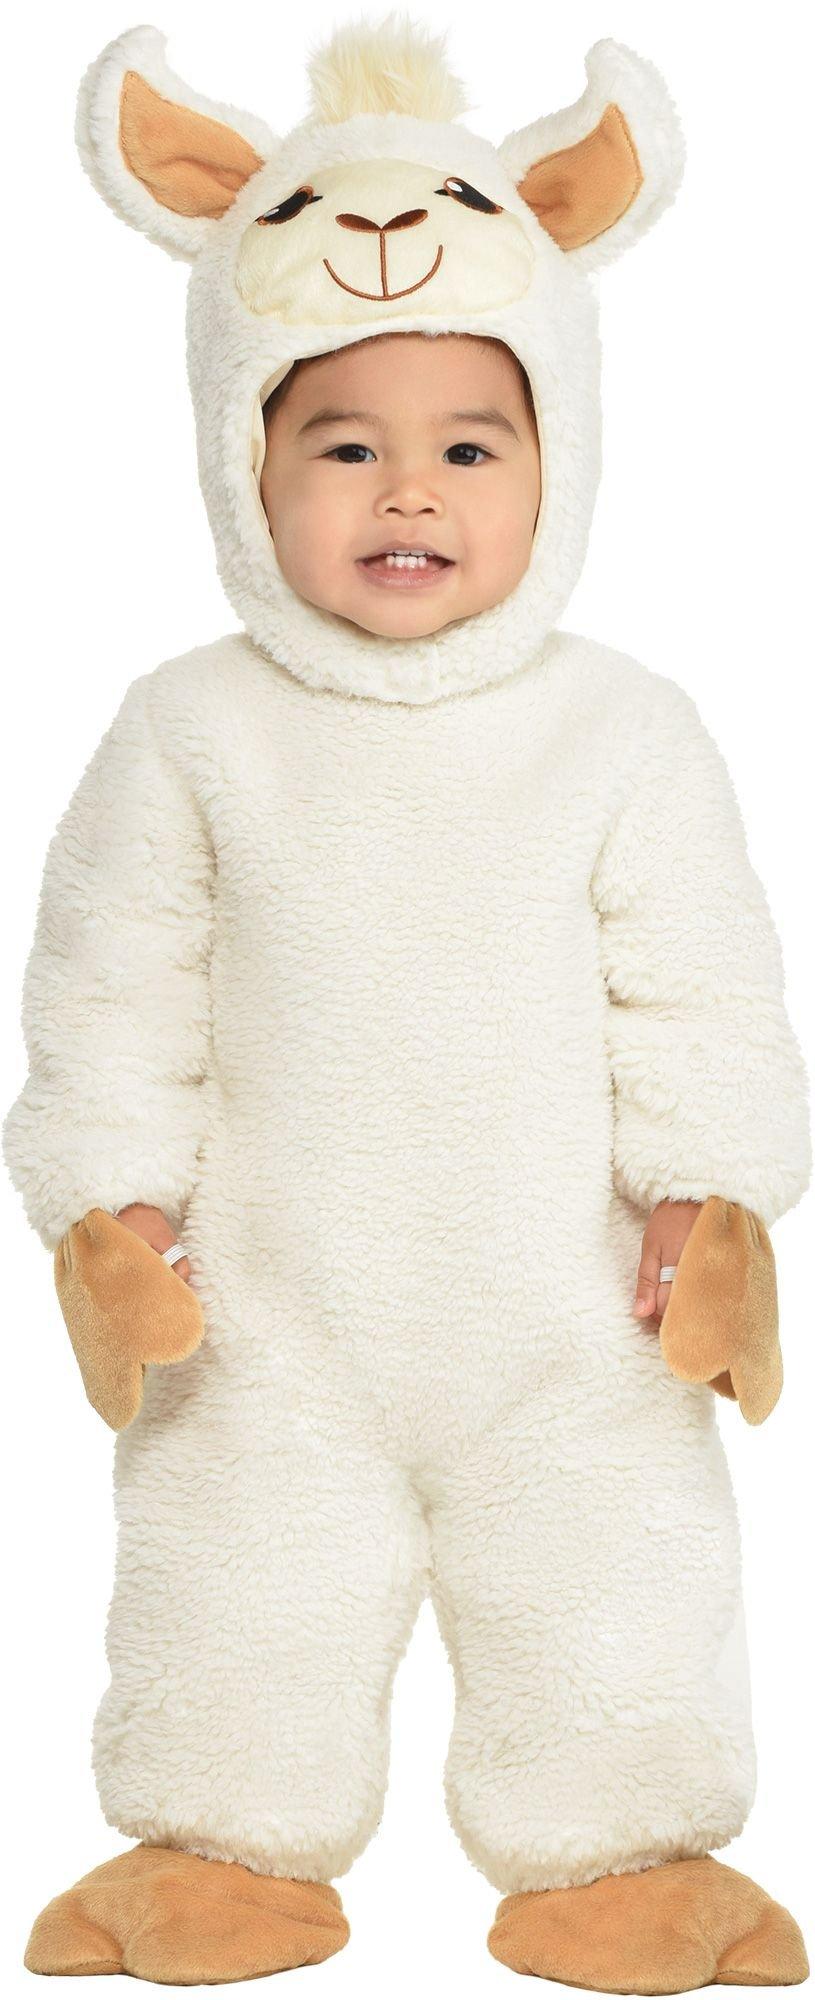 Baby Lovable Llama Costume